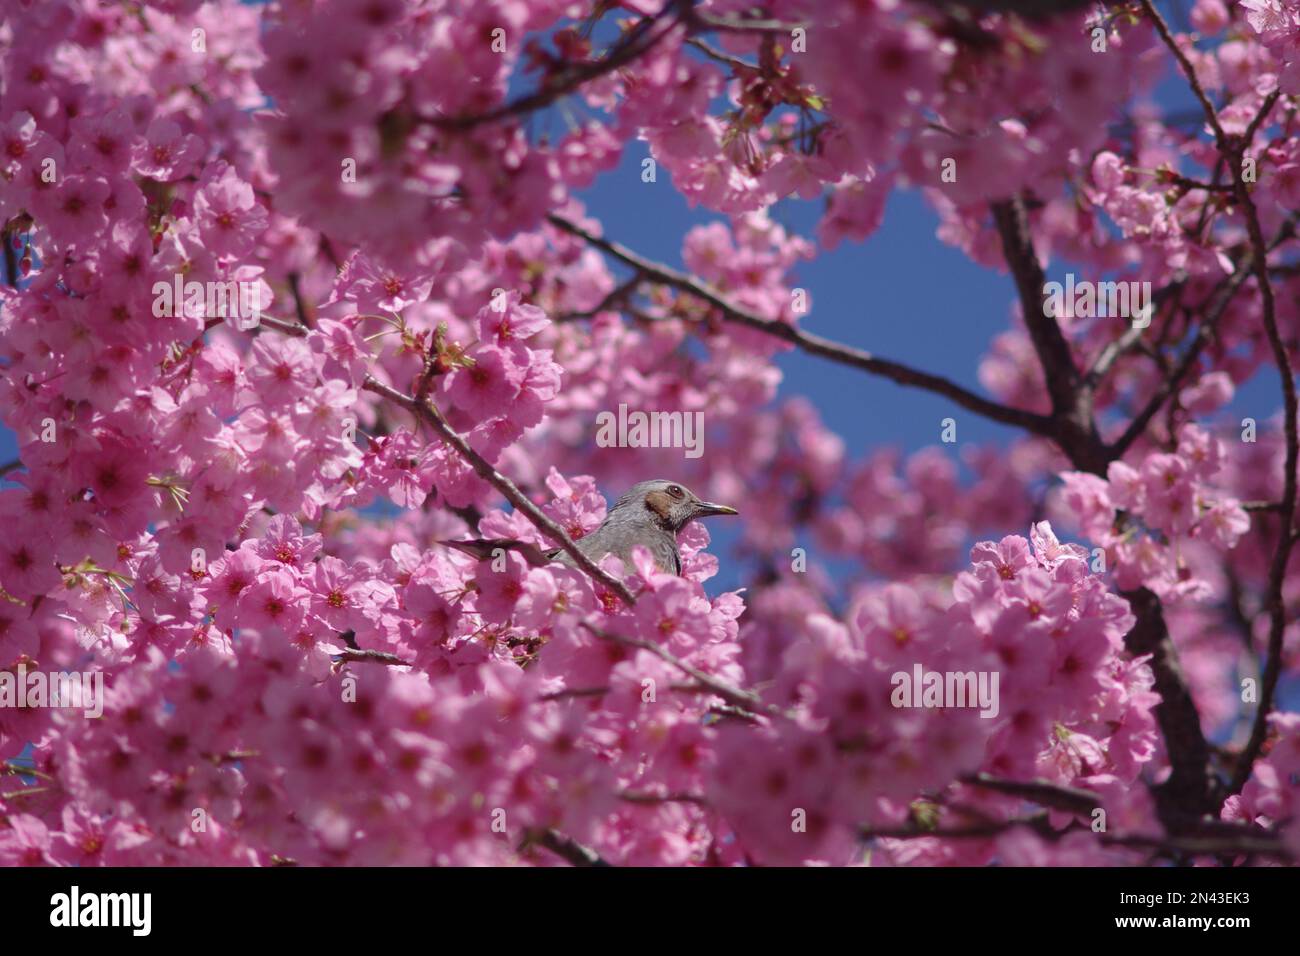 Bird in cherry blossom Stock Photo